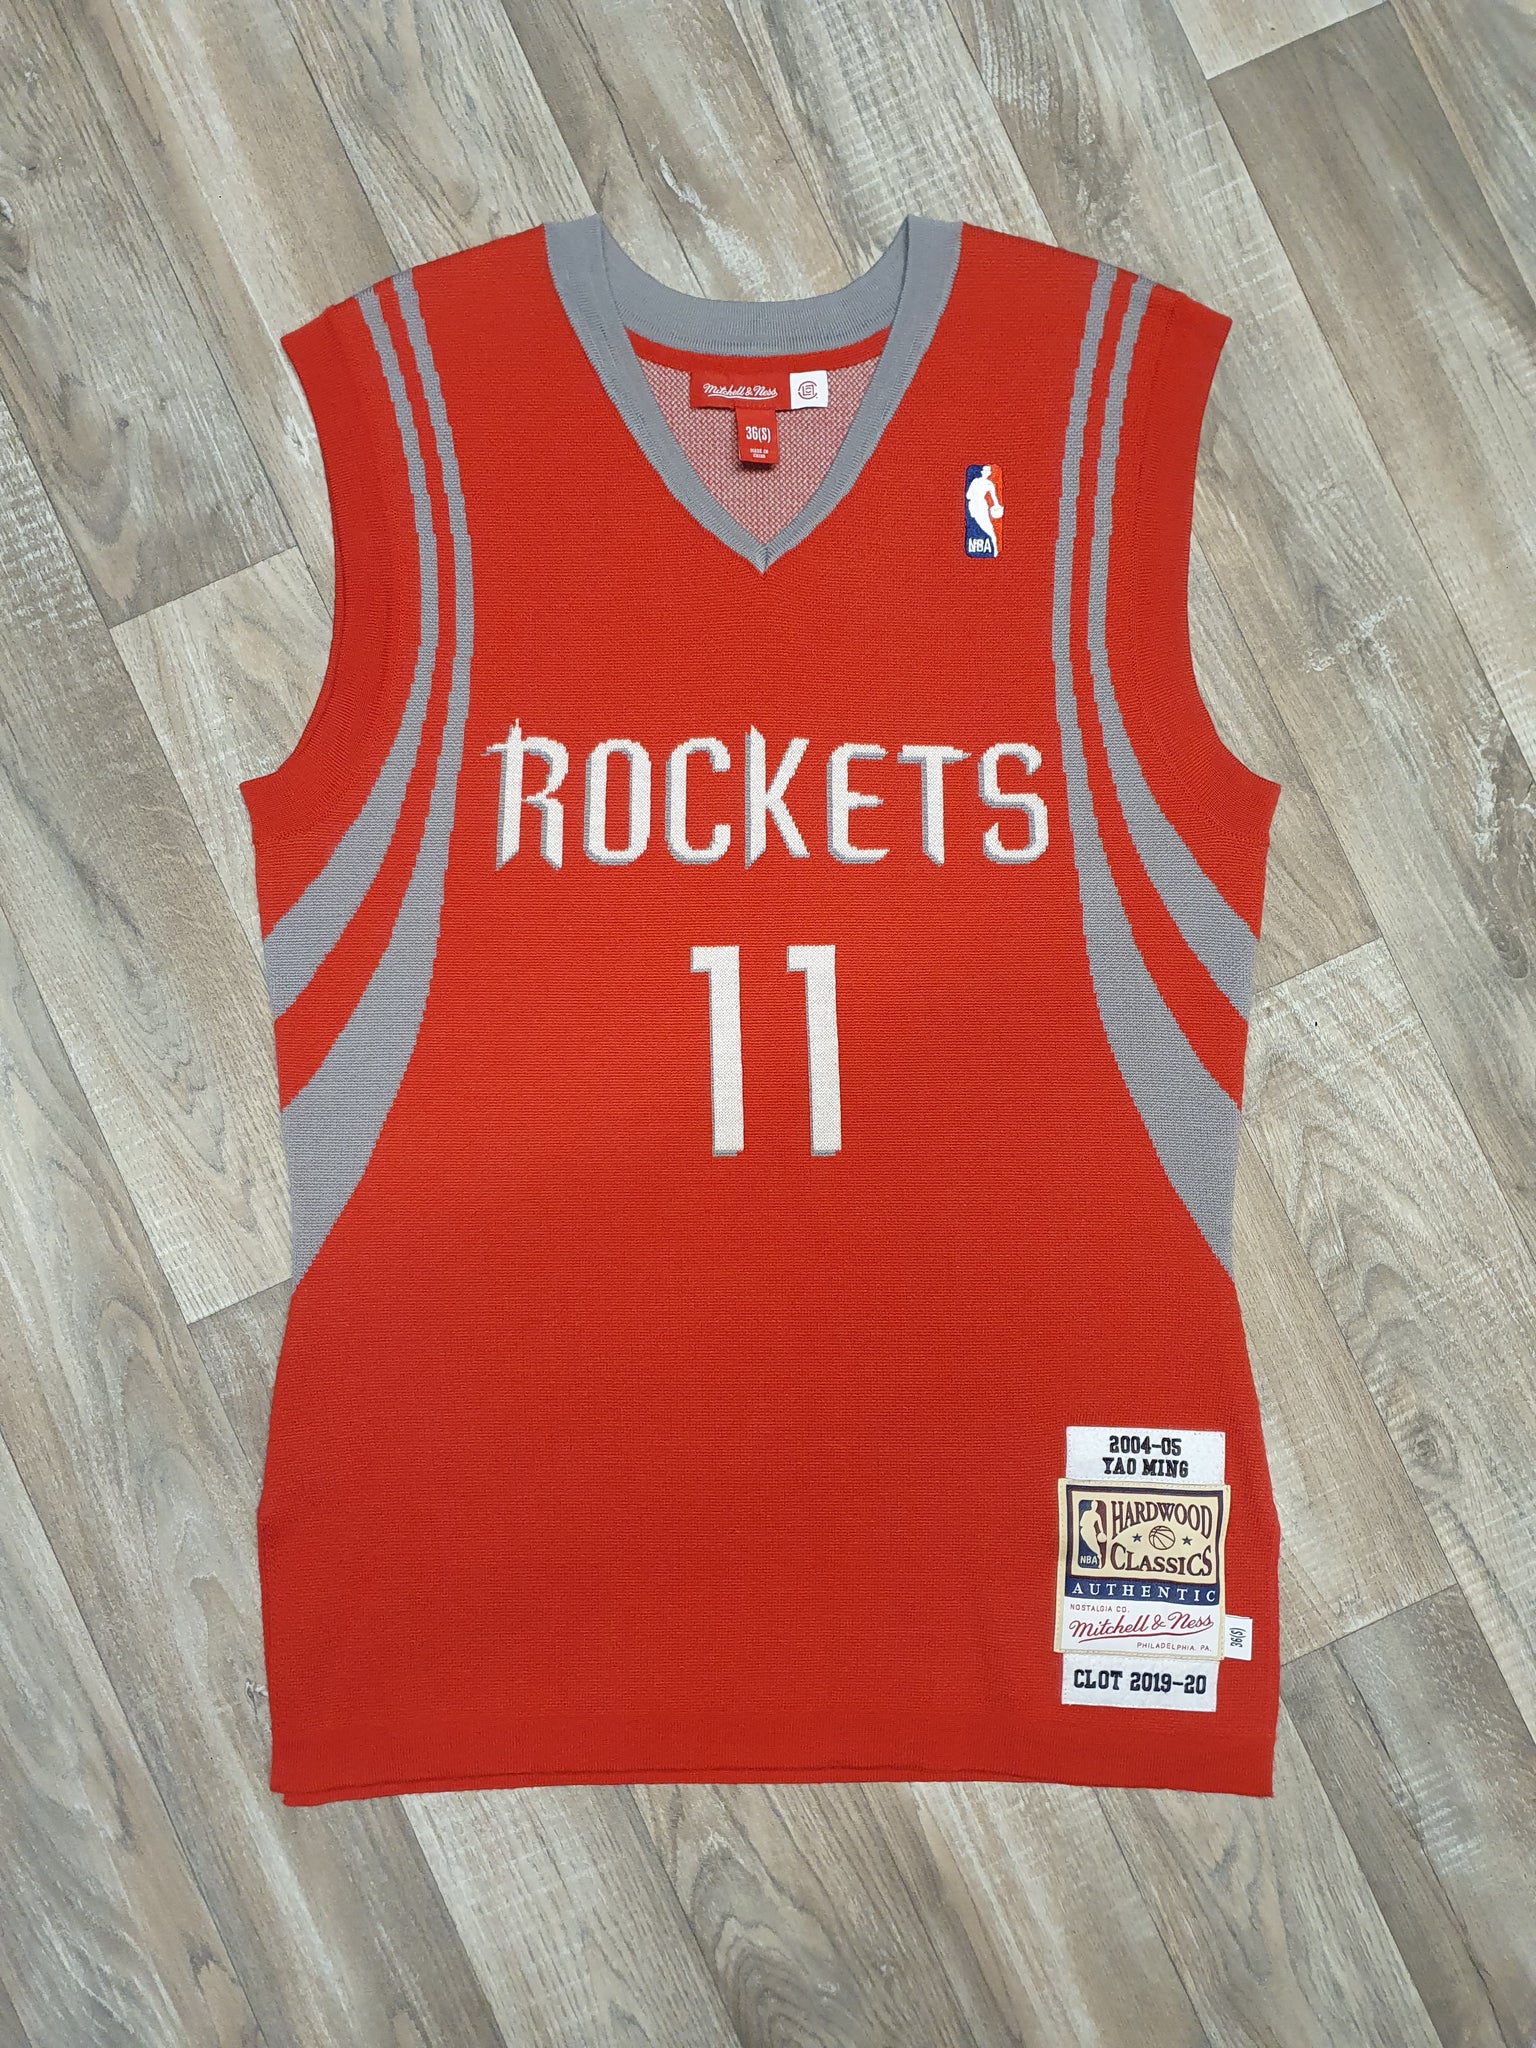 Vintage Yao Ming Houston Rockets Basketball Jersey